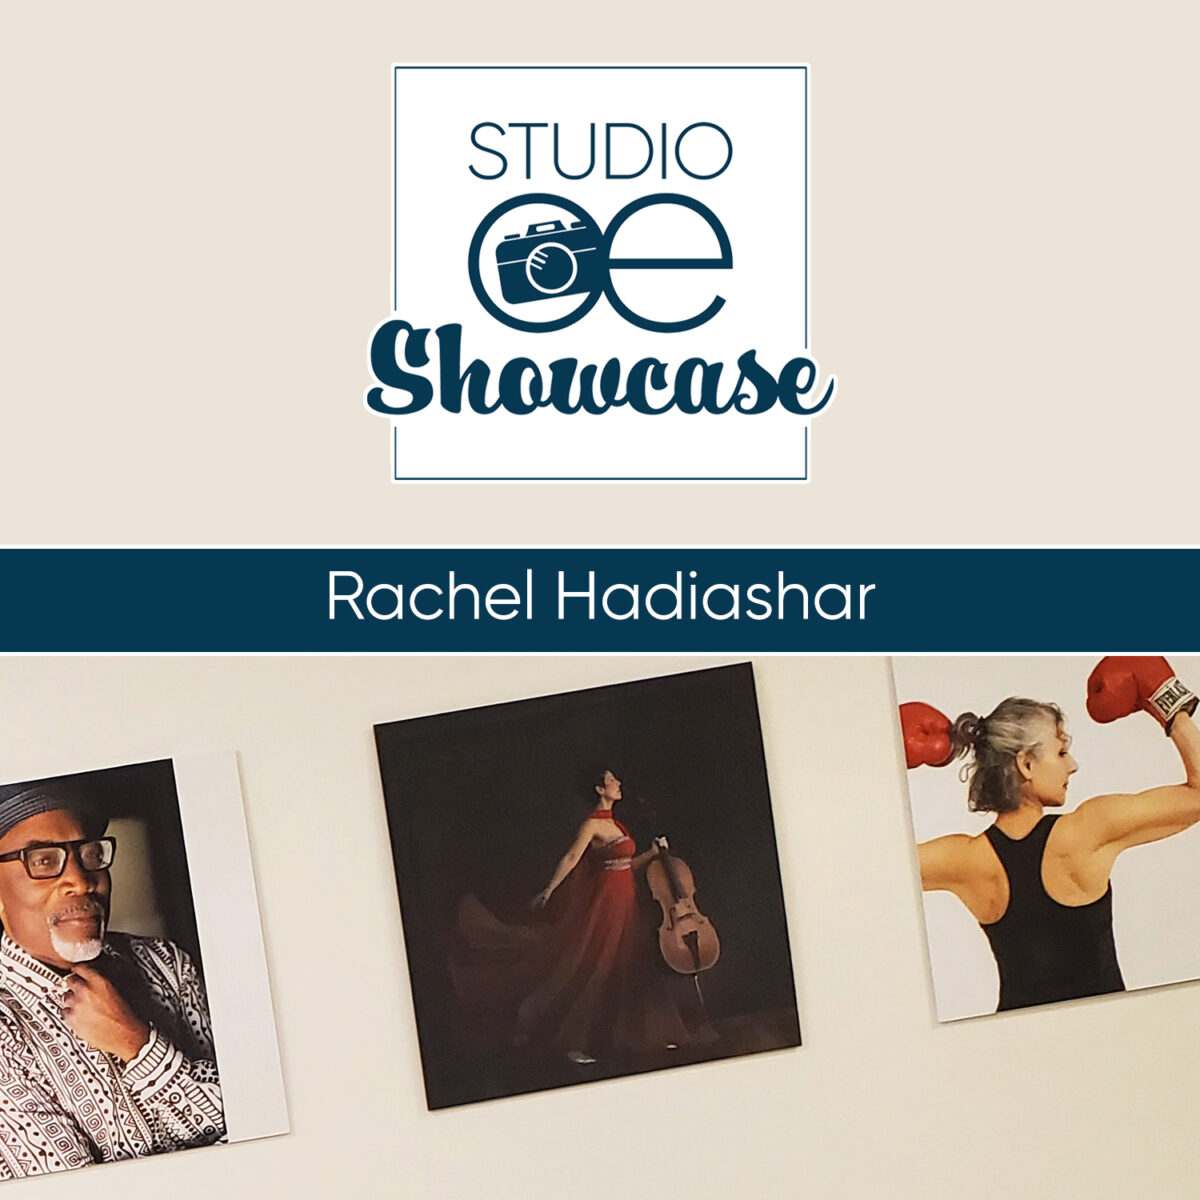 Gallery wall at Office Evolution Hillsboro of Rachel Hadiashar's portrait photography